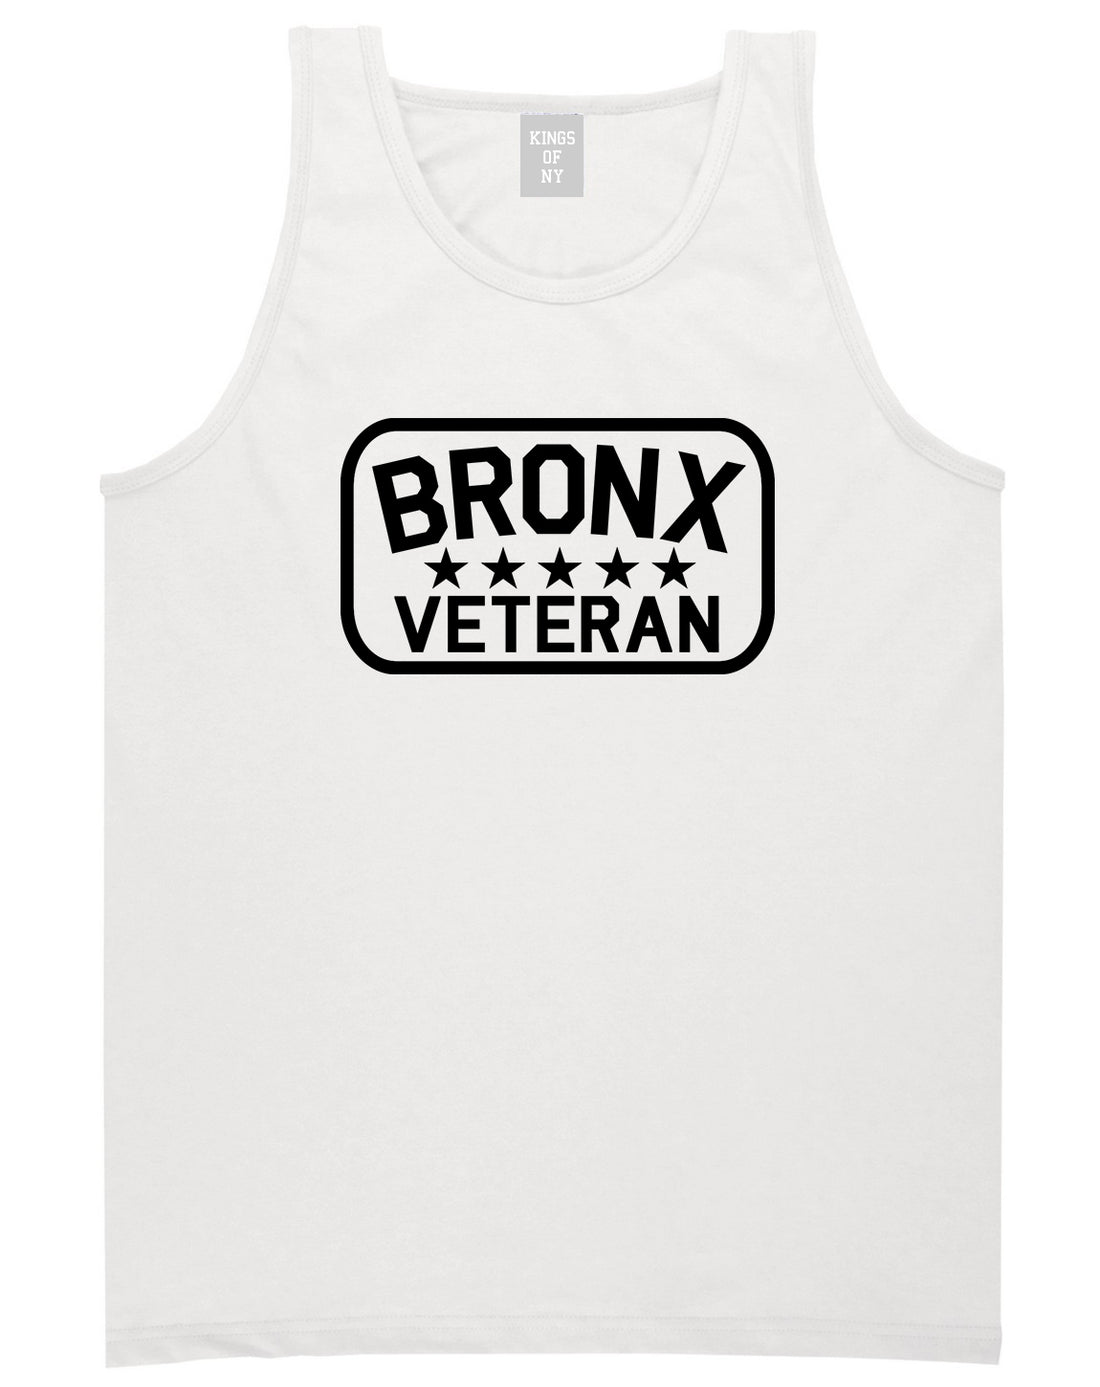 Bronx Veteran Mens Tank Top Shirt White